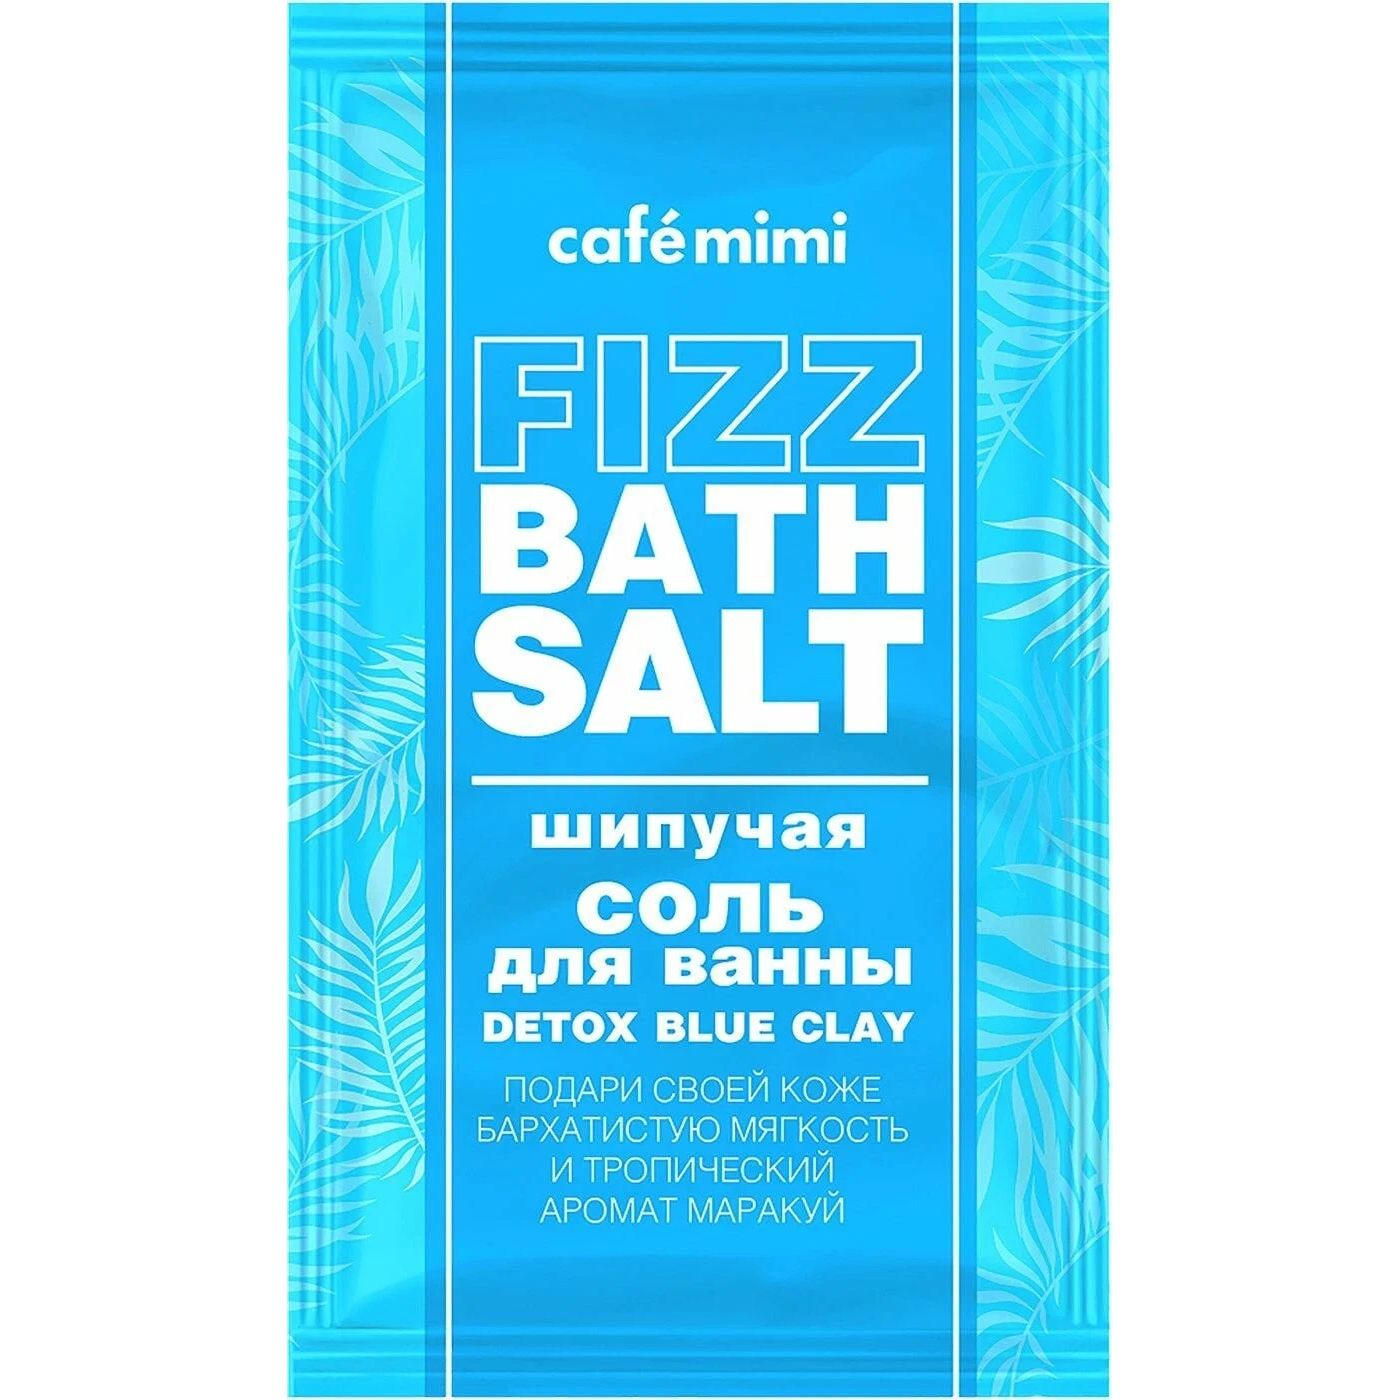 Соль для ванн Cafemimi Fizz Bath Salt Detox Blue Clay шипучая, 100 г